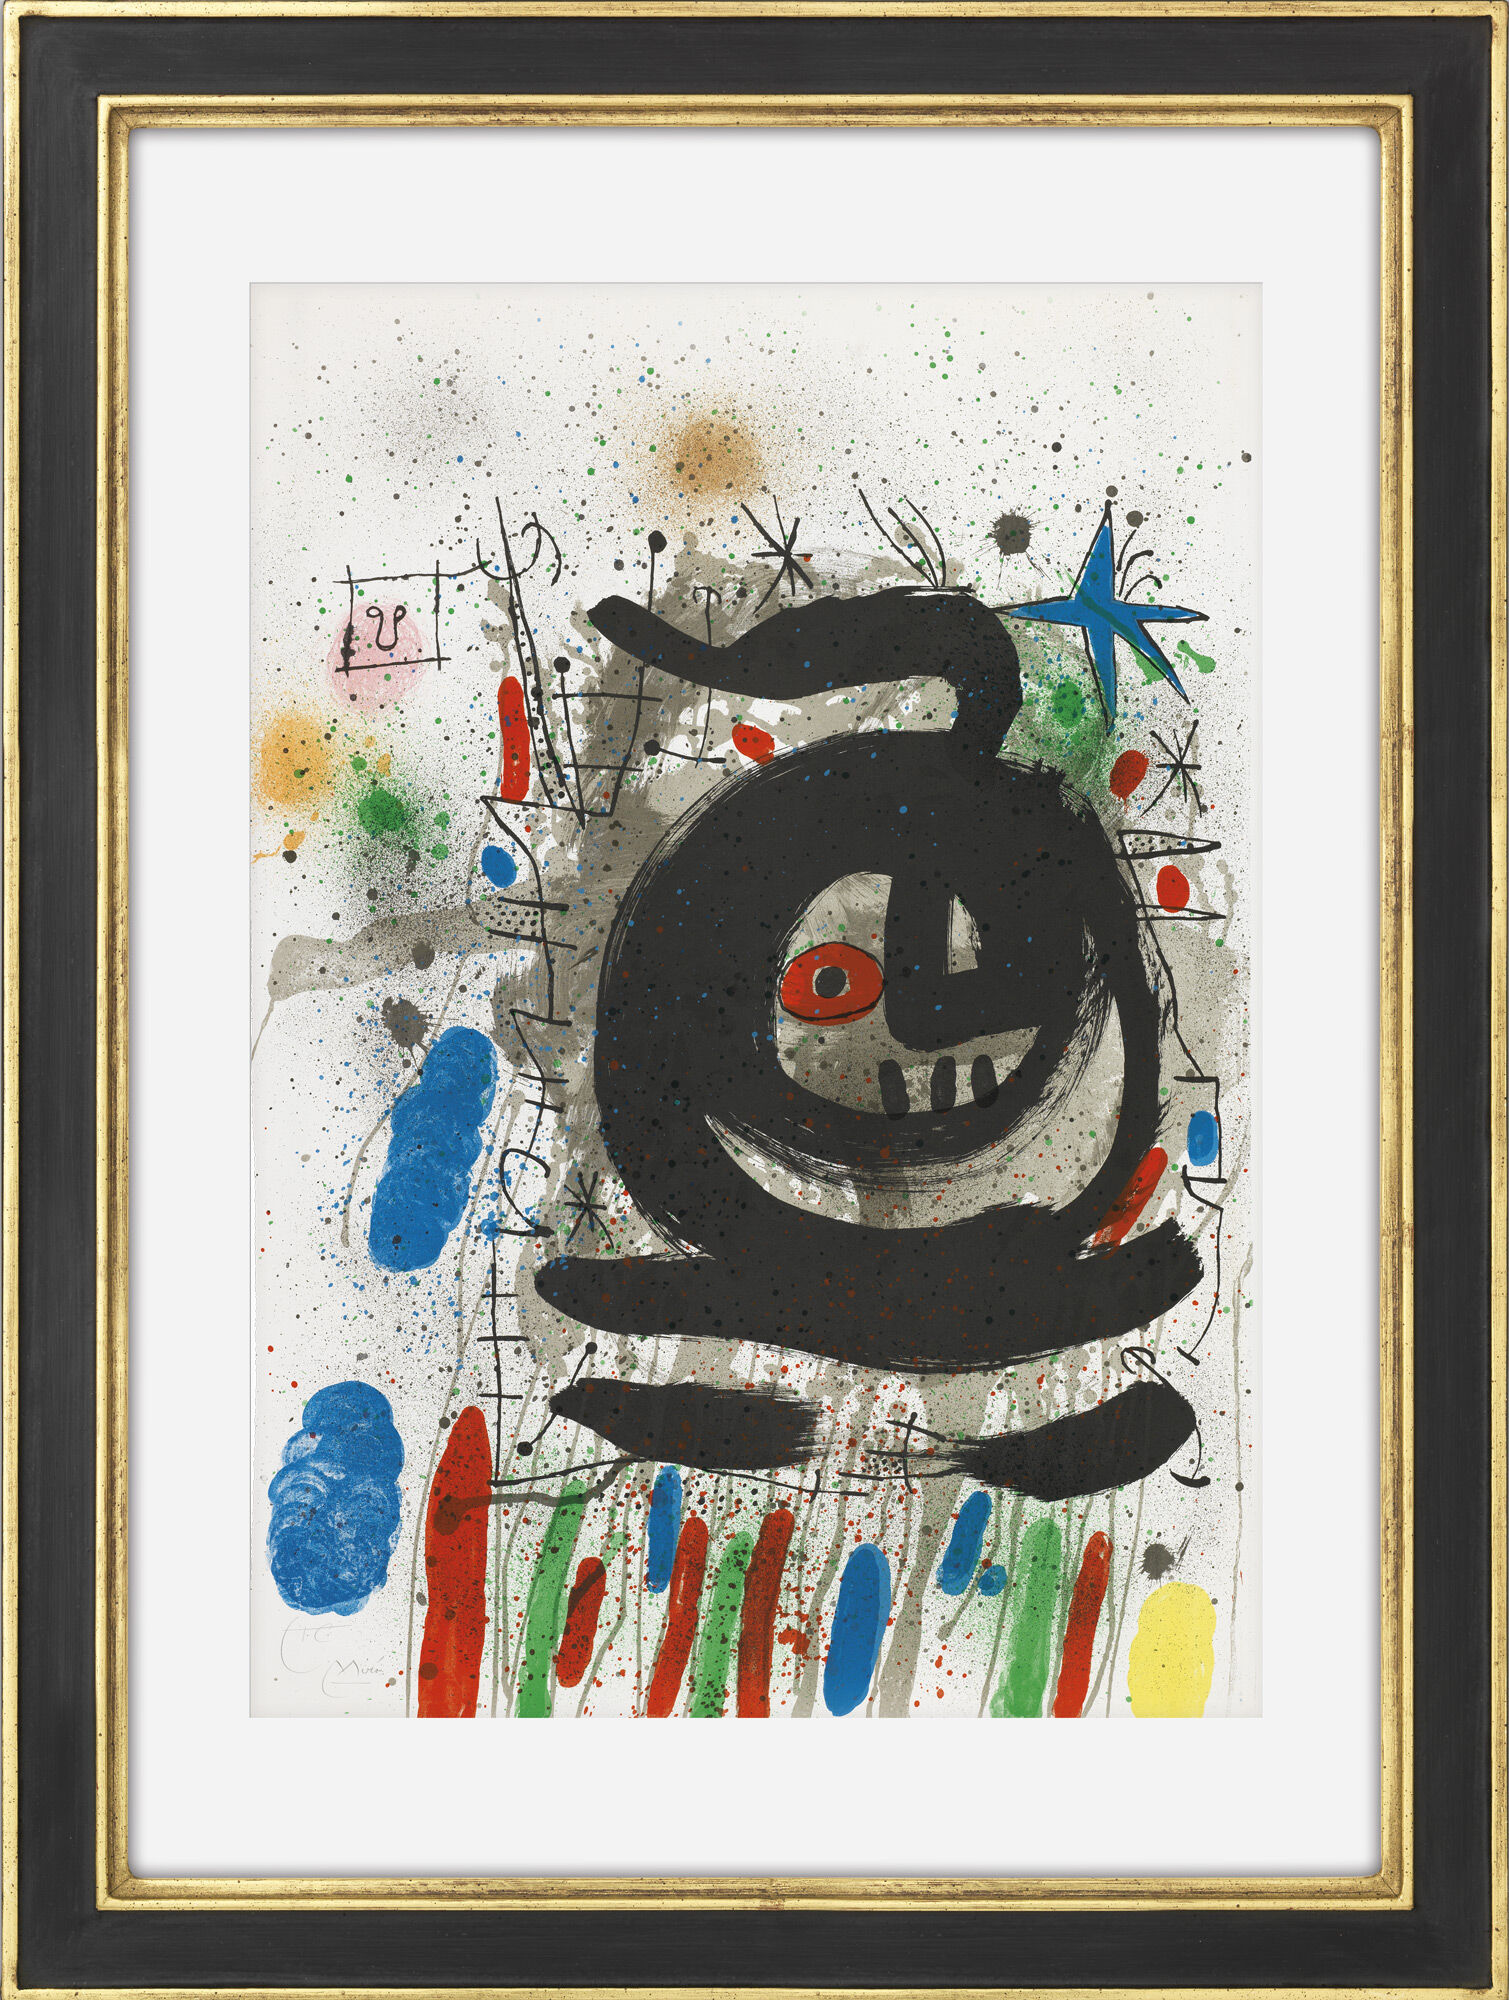 Picture "Composition pour Club 49, Barcelona" (1968) by Joan Miró